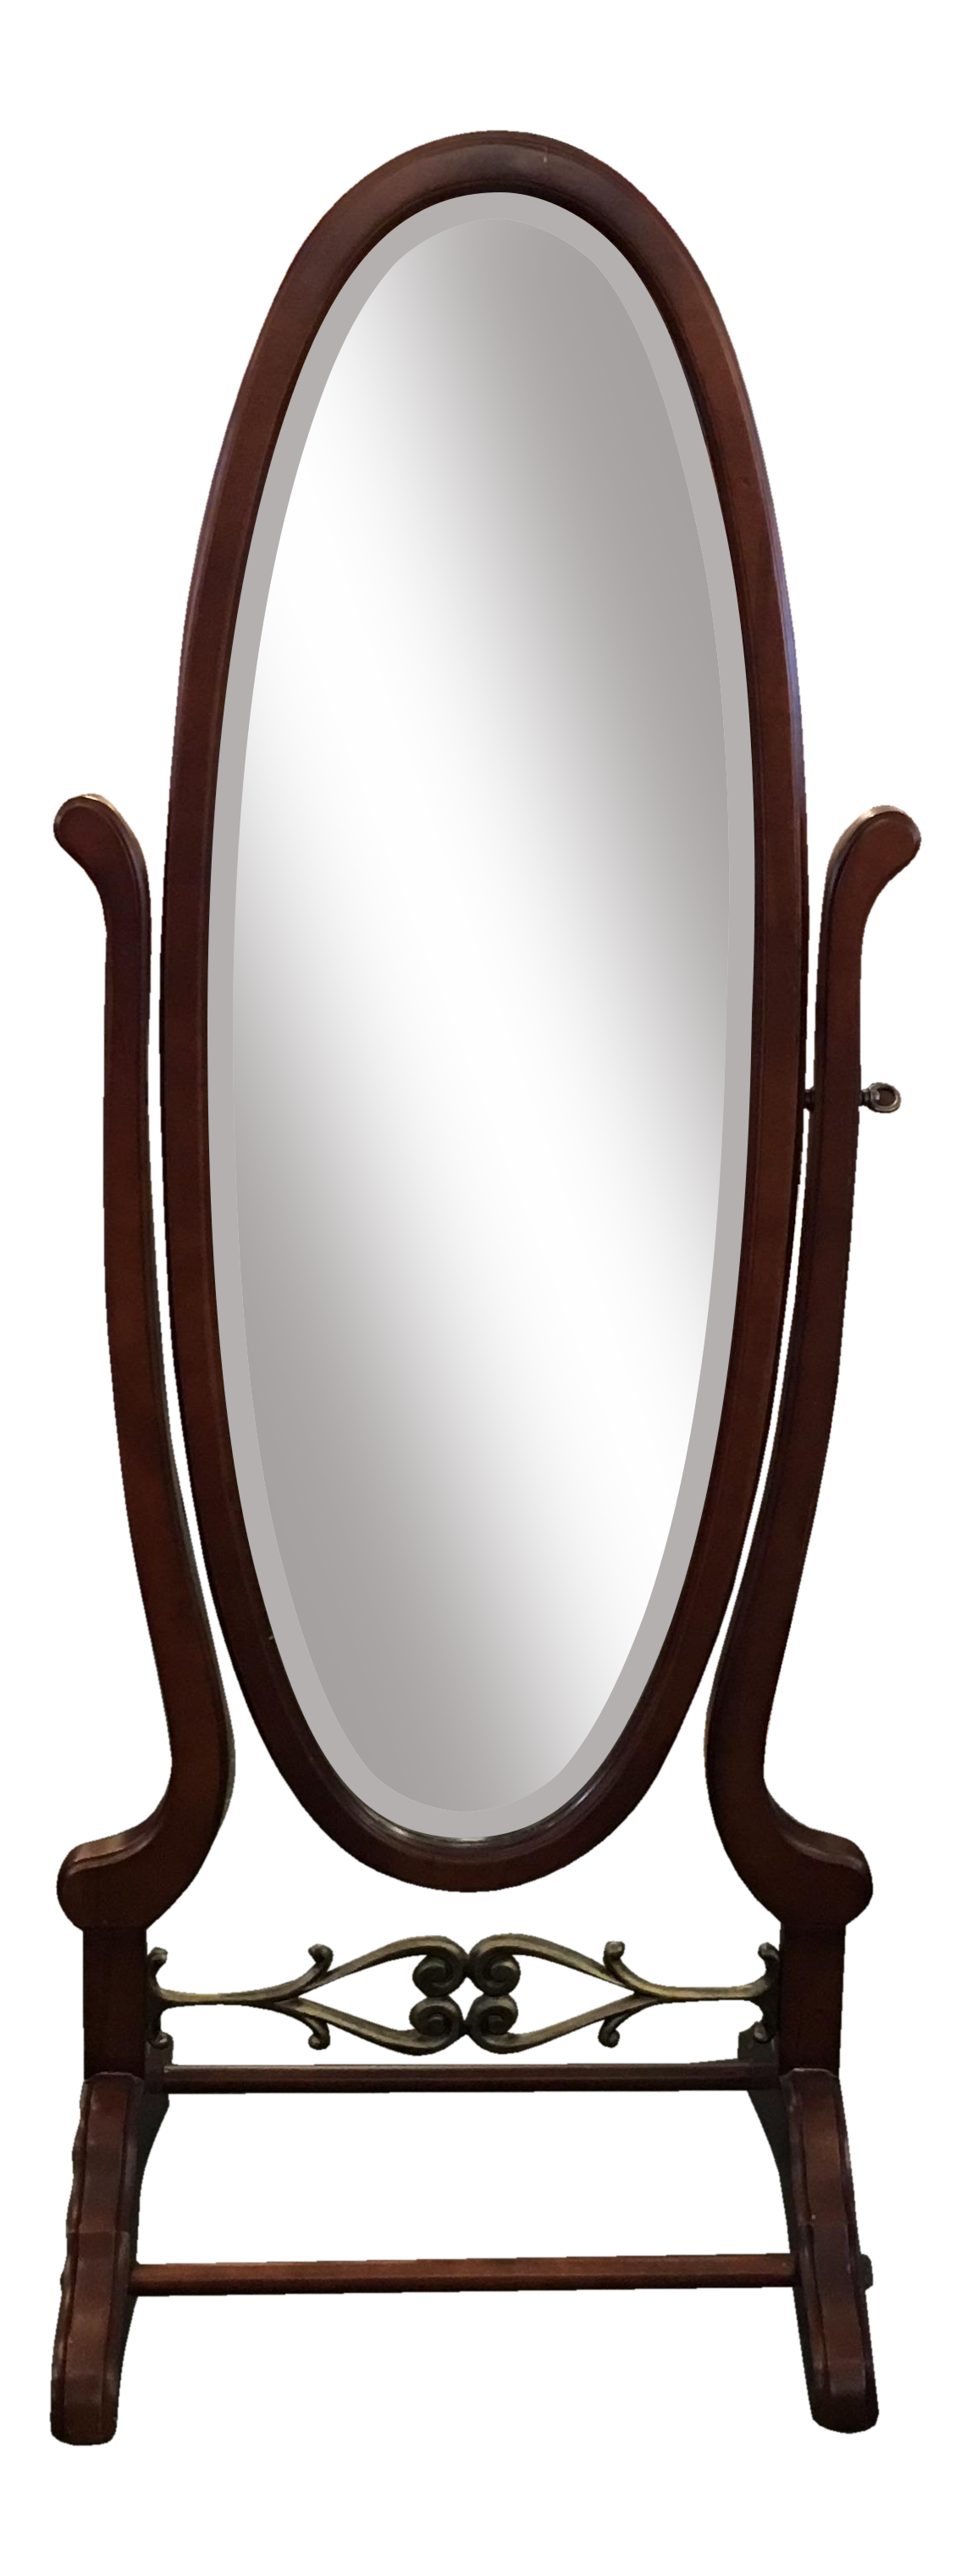 Mirror clipart floor mirror, Mirror floor mirror Transparent FREE for